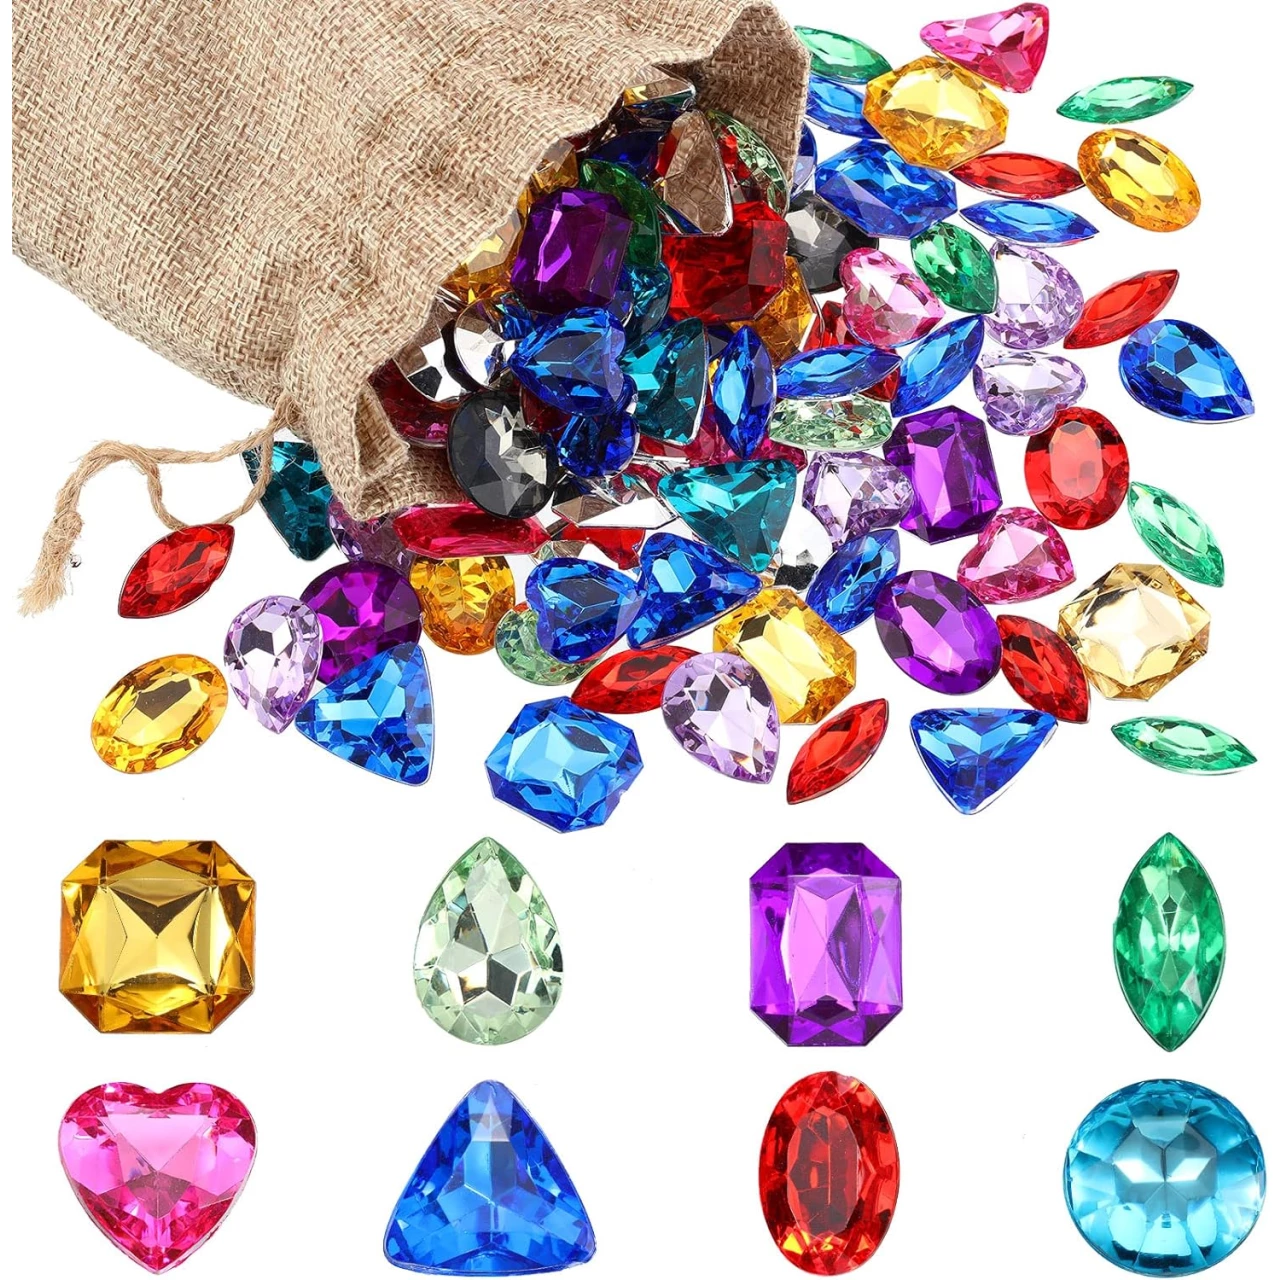 Hicarer 100 Pieces Pirate Treasure Jewels